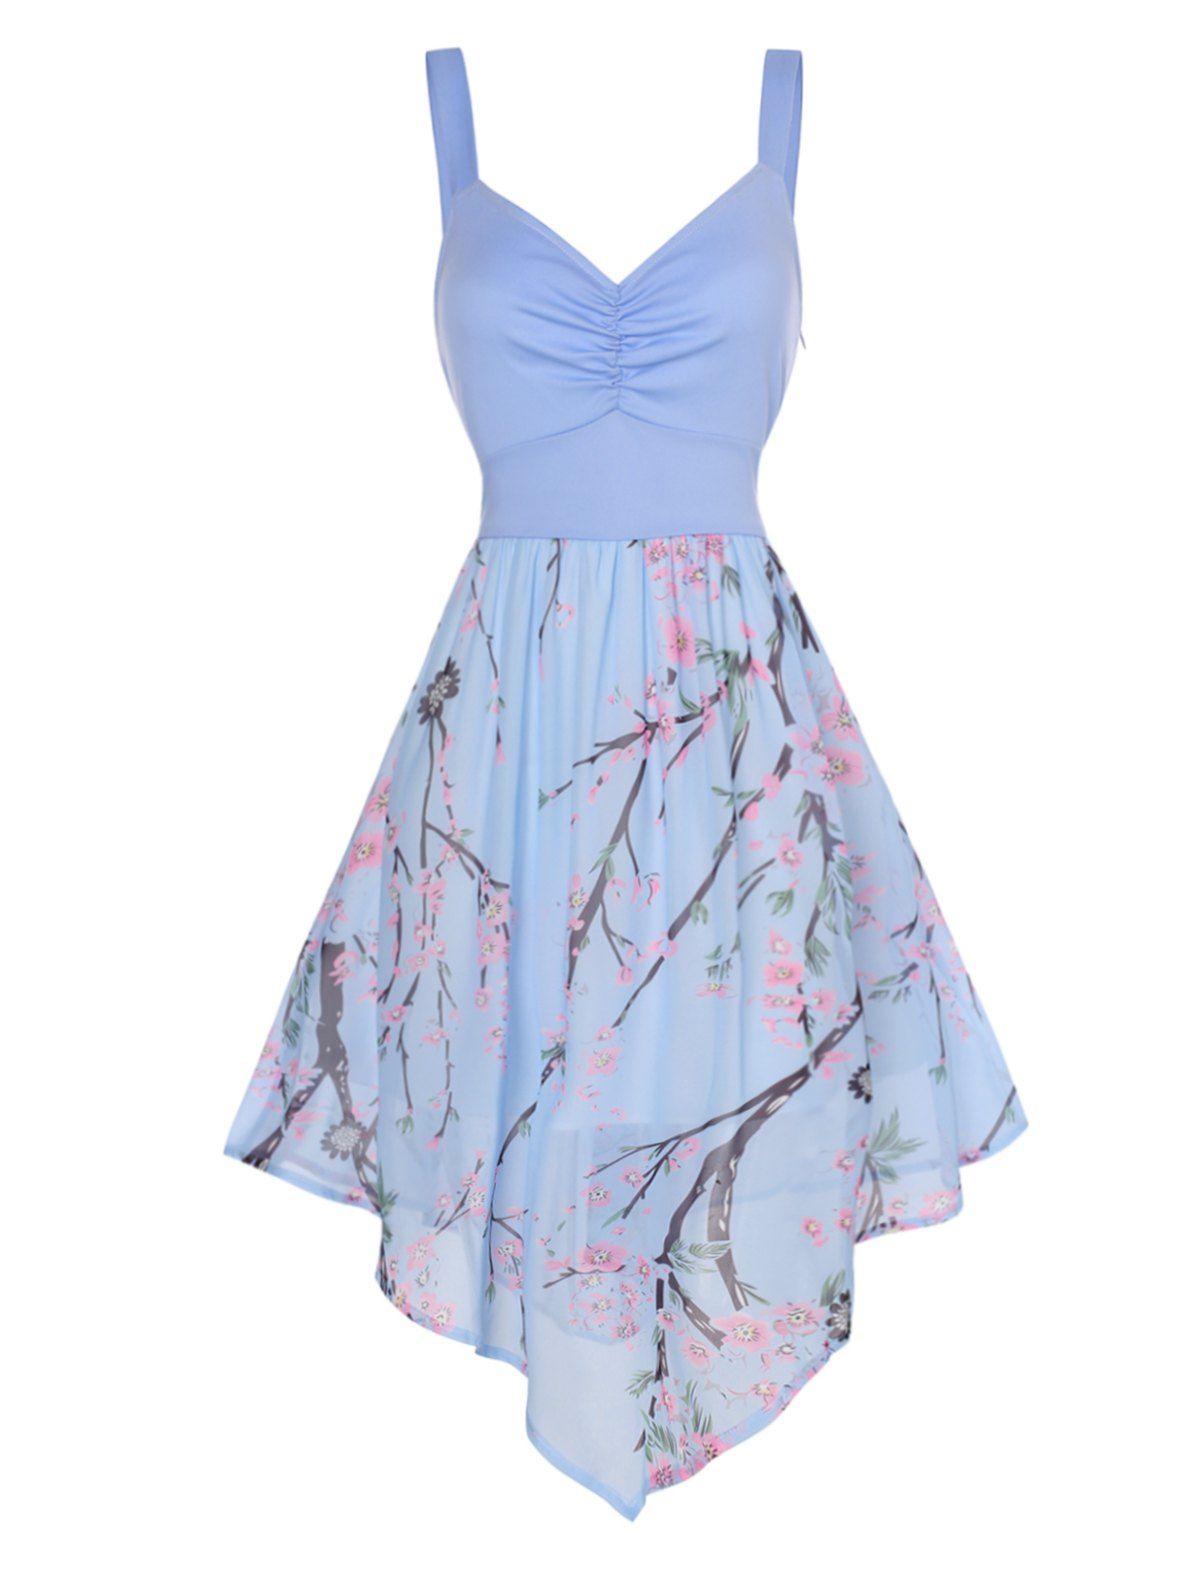 Vacation Chiffon Midi Floral Sundress Peach Blossom Print Ruched Pointed Hem Empire Waist Casual Summer Dress - LIGHT BLUE M